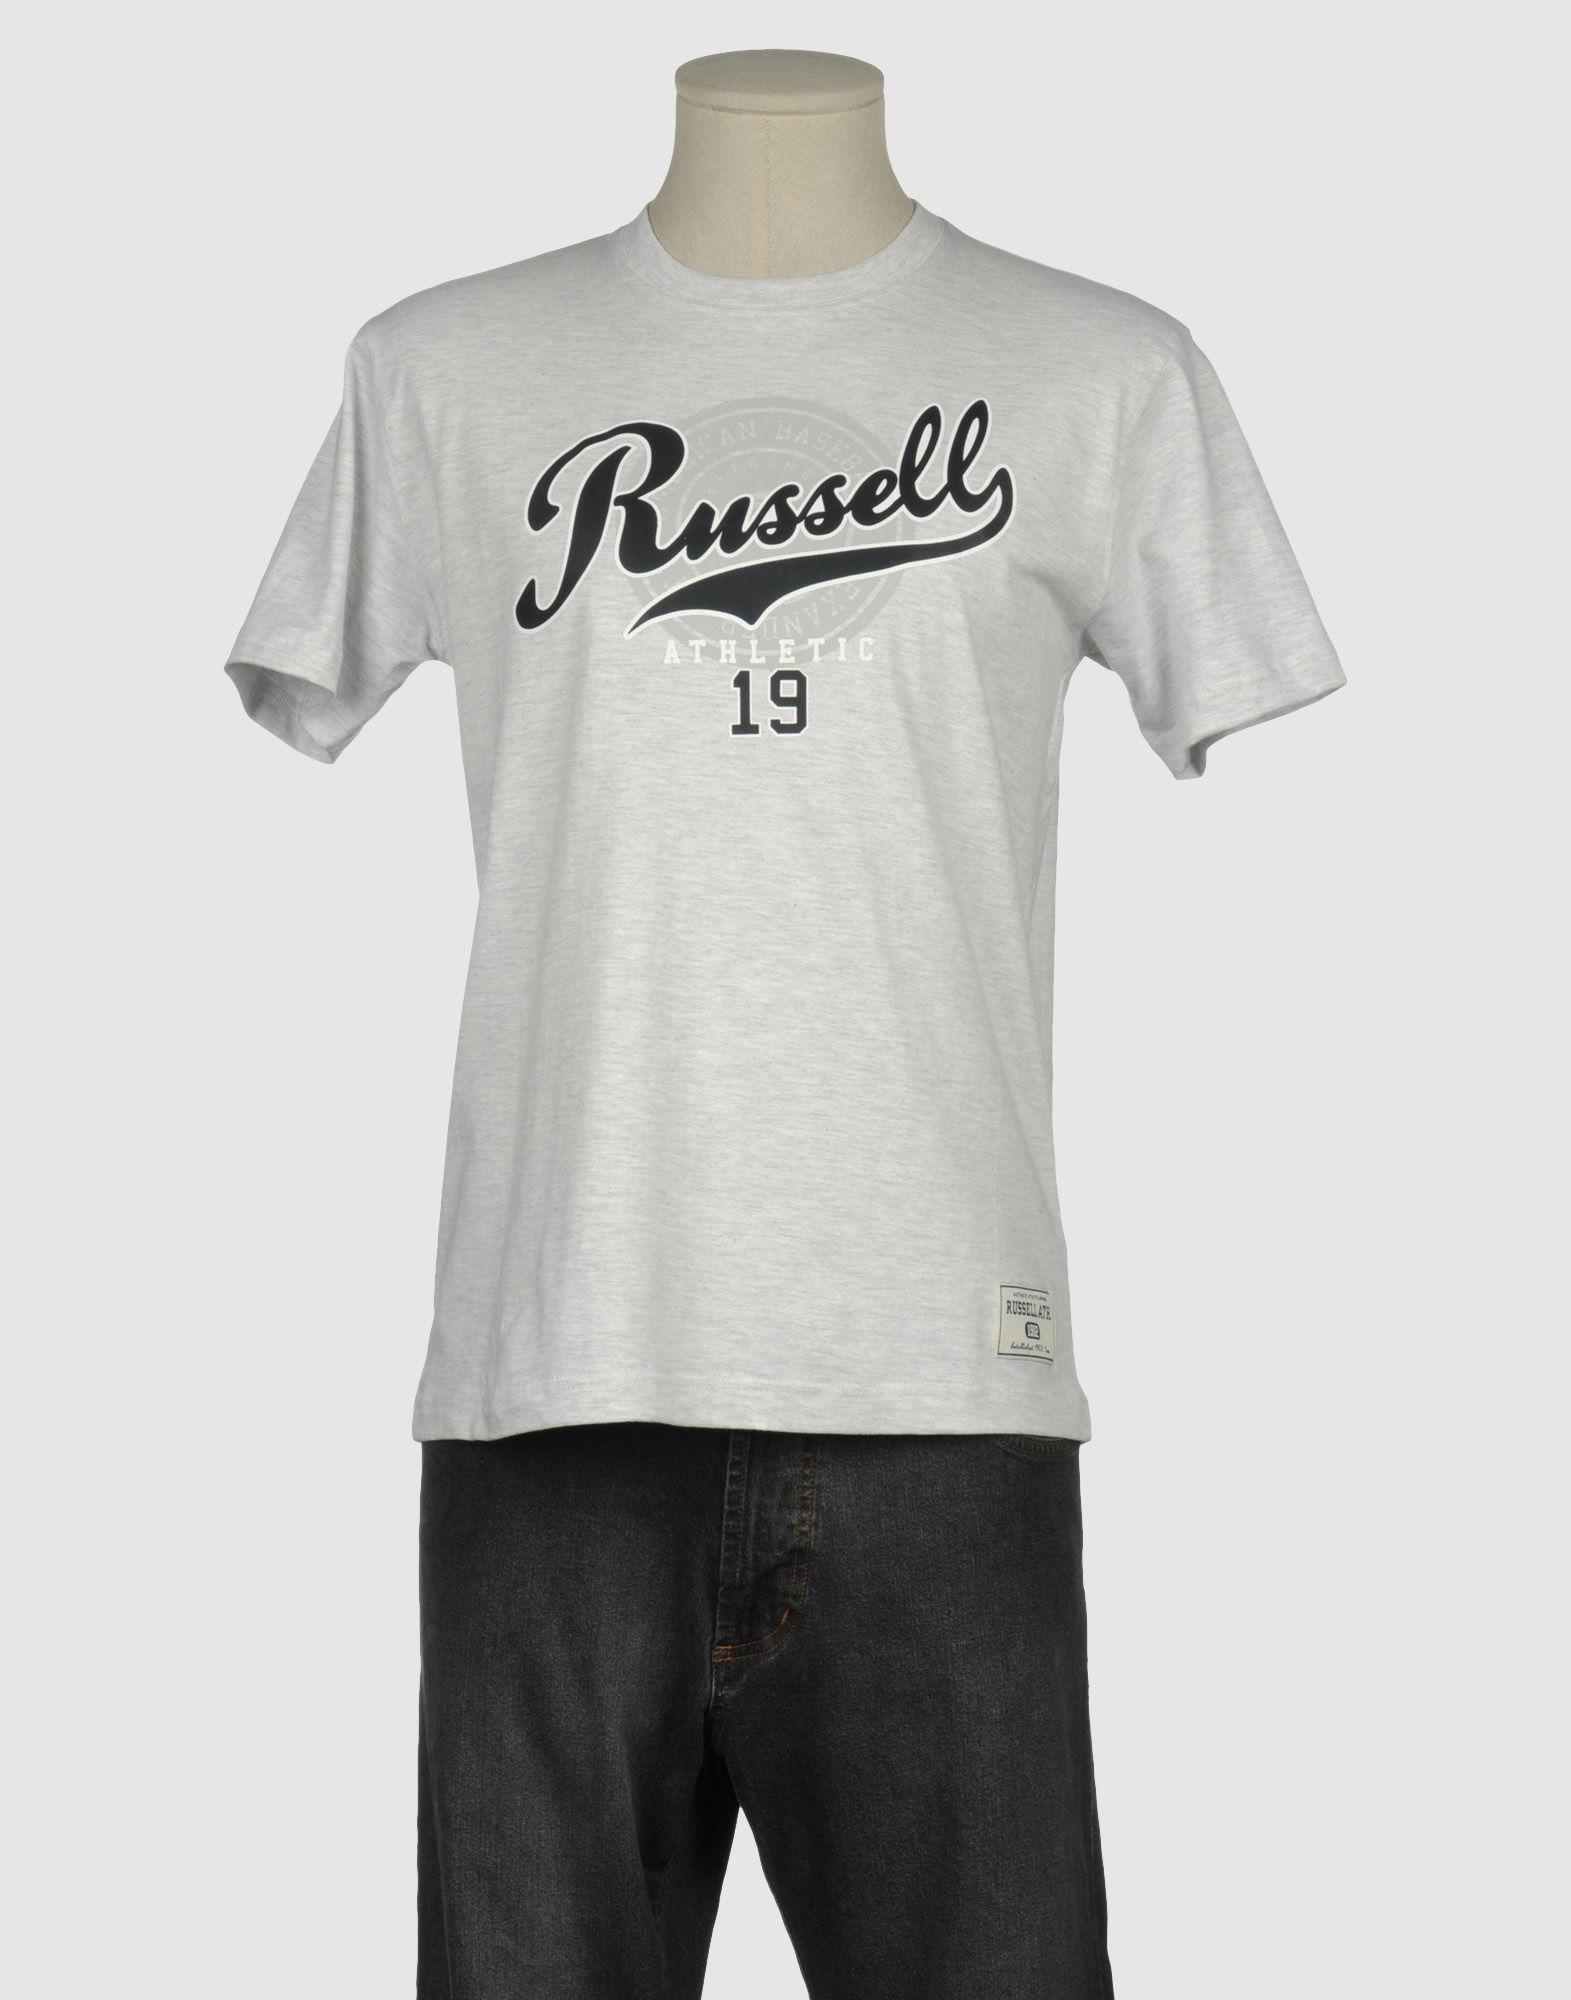 Foto Russell Athletic Camisetas De Manga Corta Hombre Gris perla foto 732353